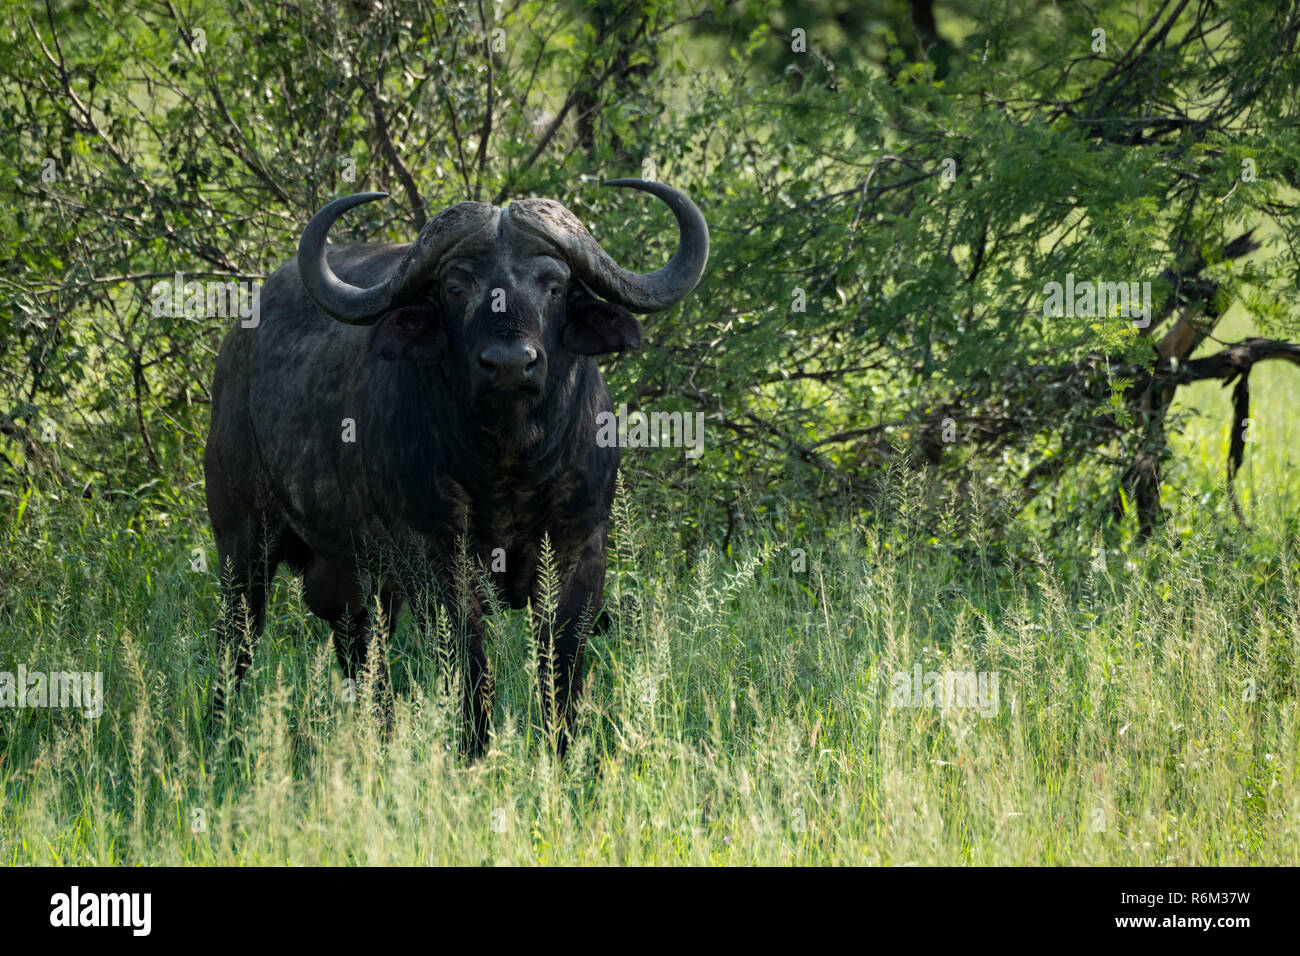 Cape buffalo facing camera from beside bushes Stock Photo